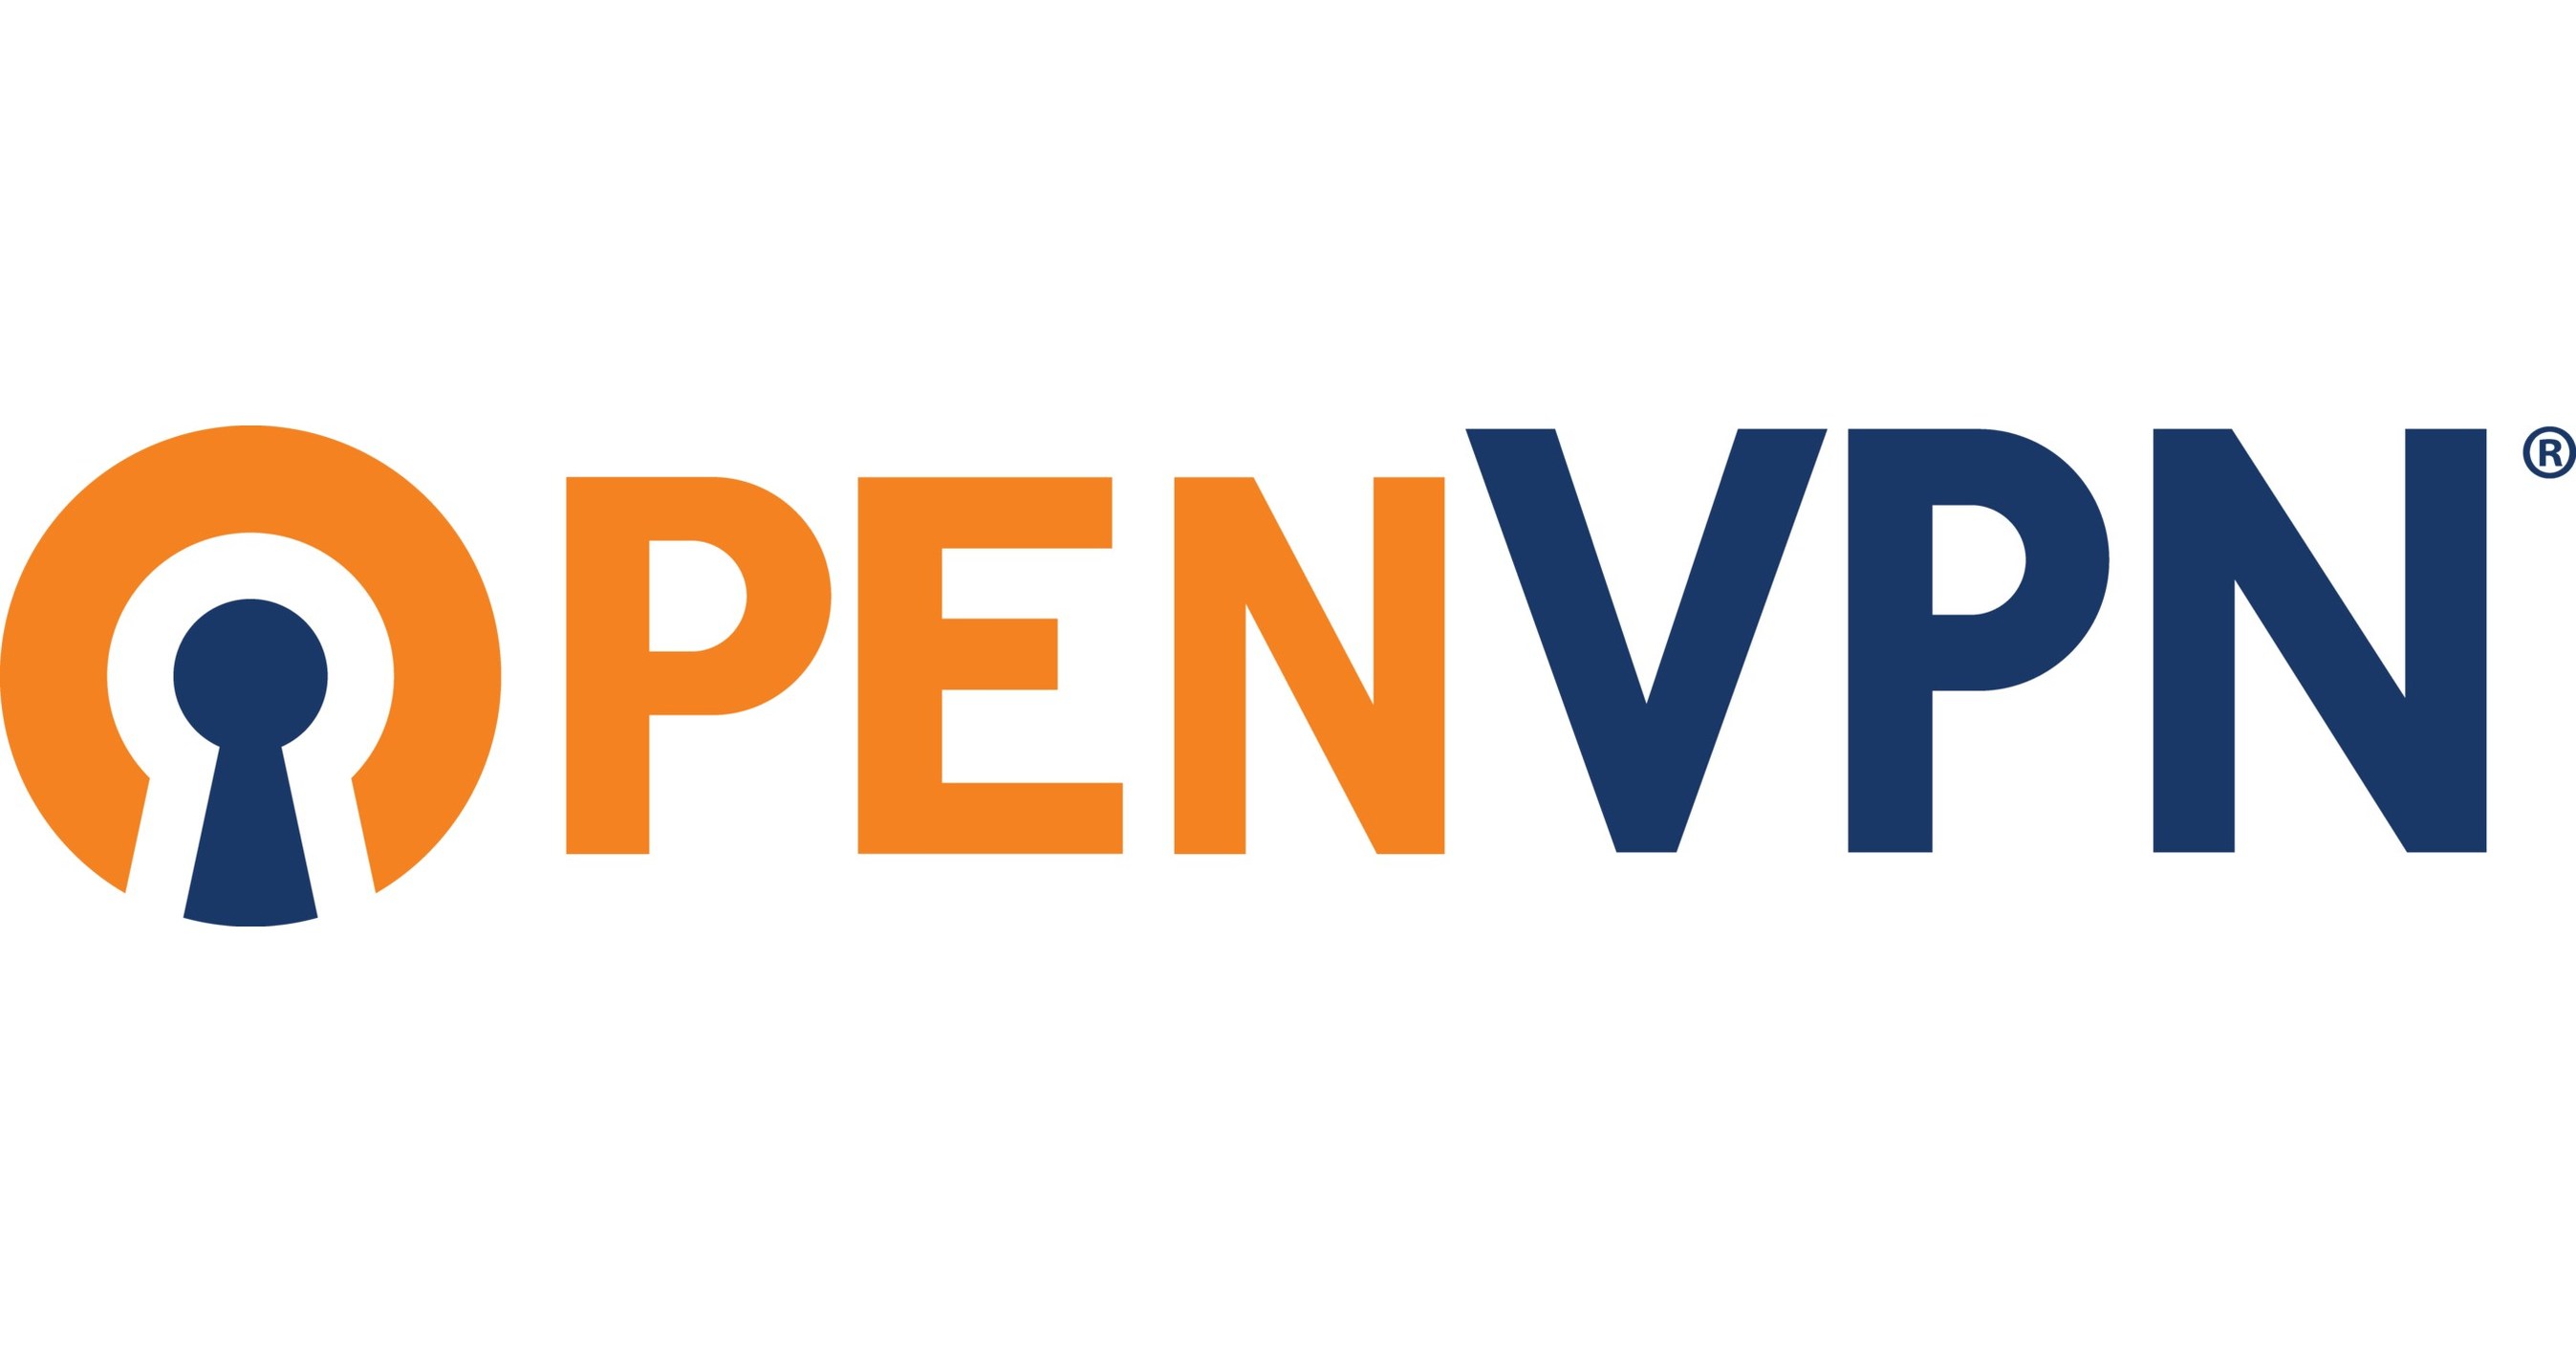 openvpn connect app store